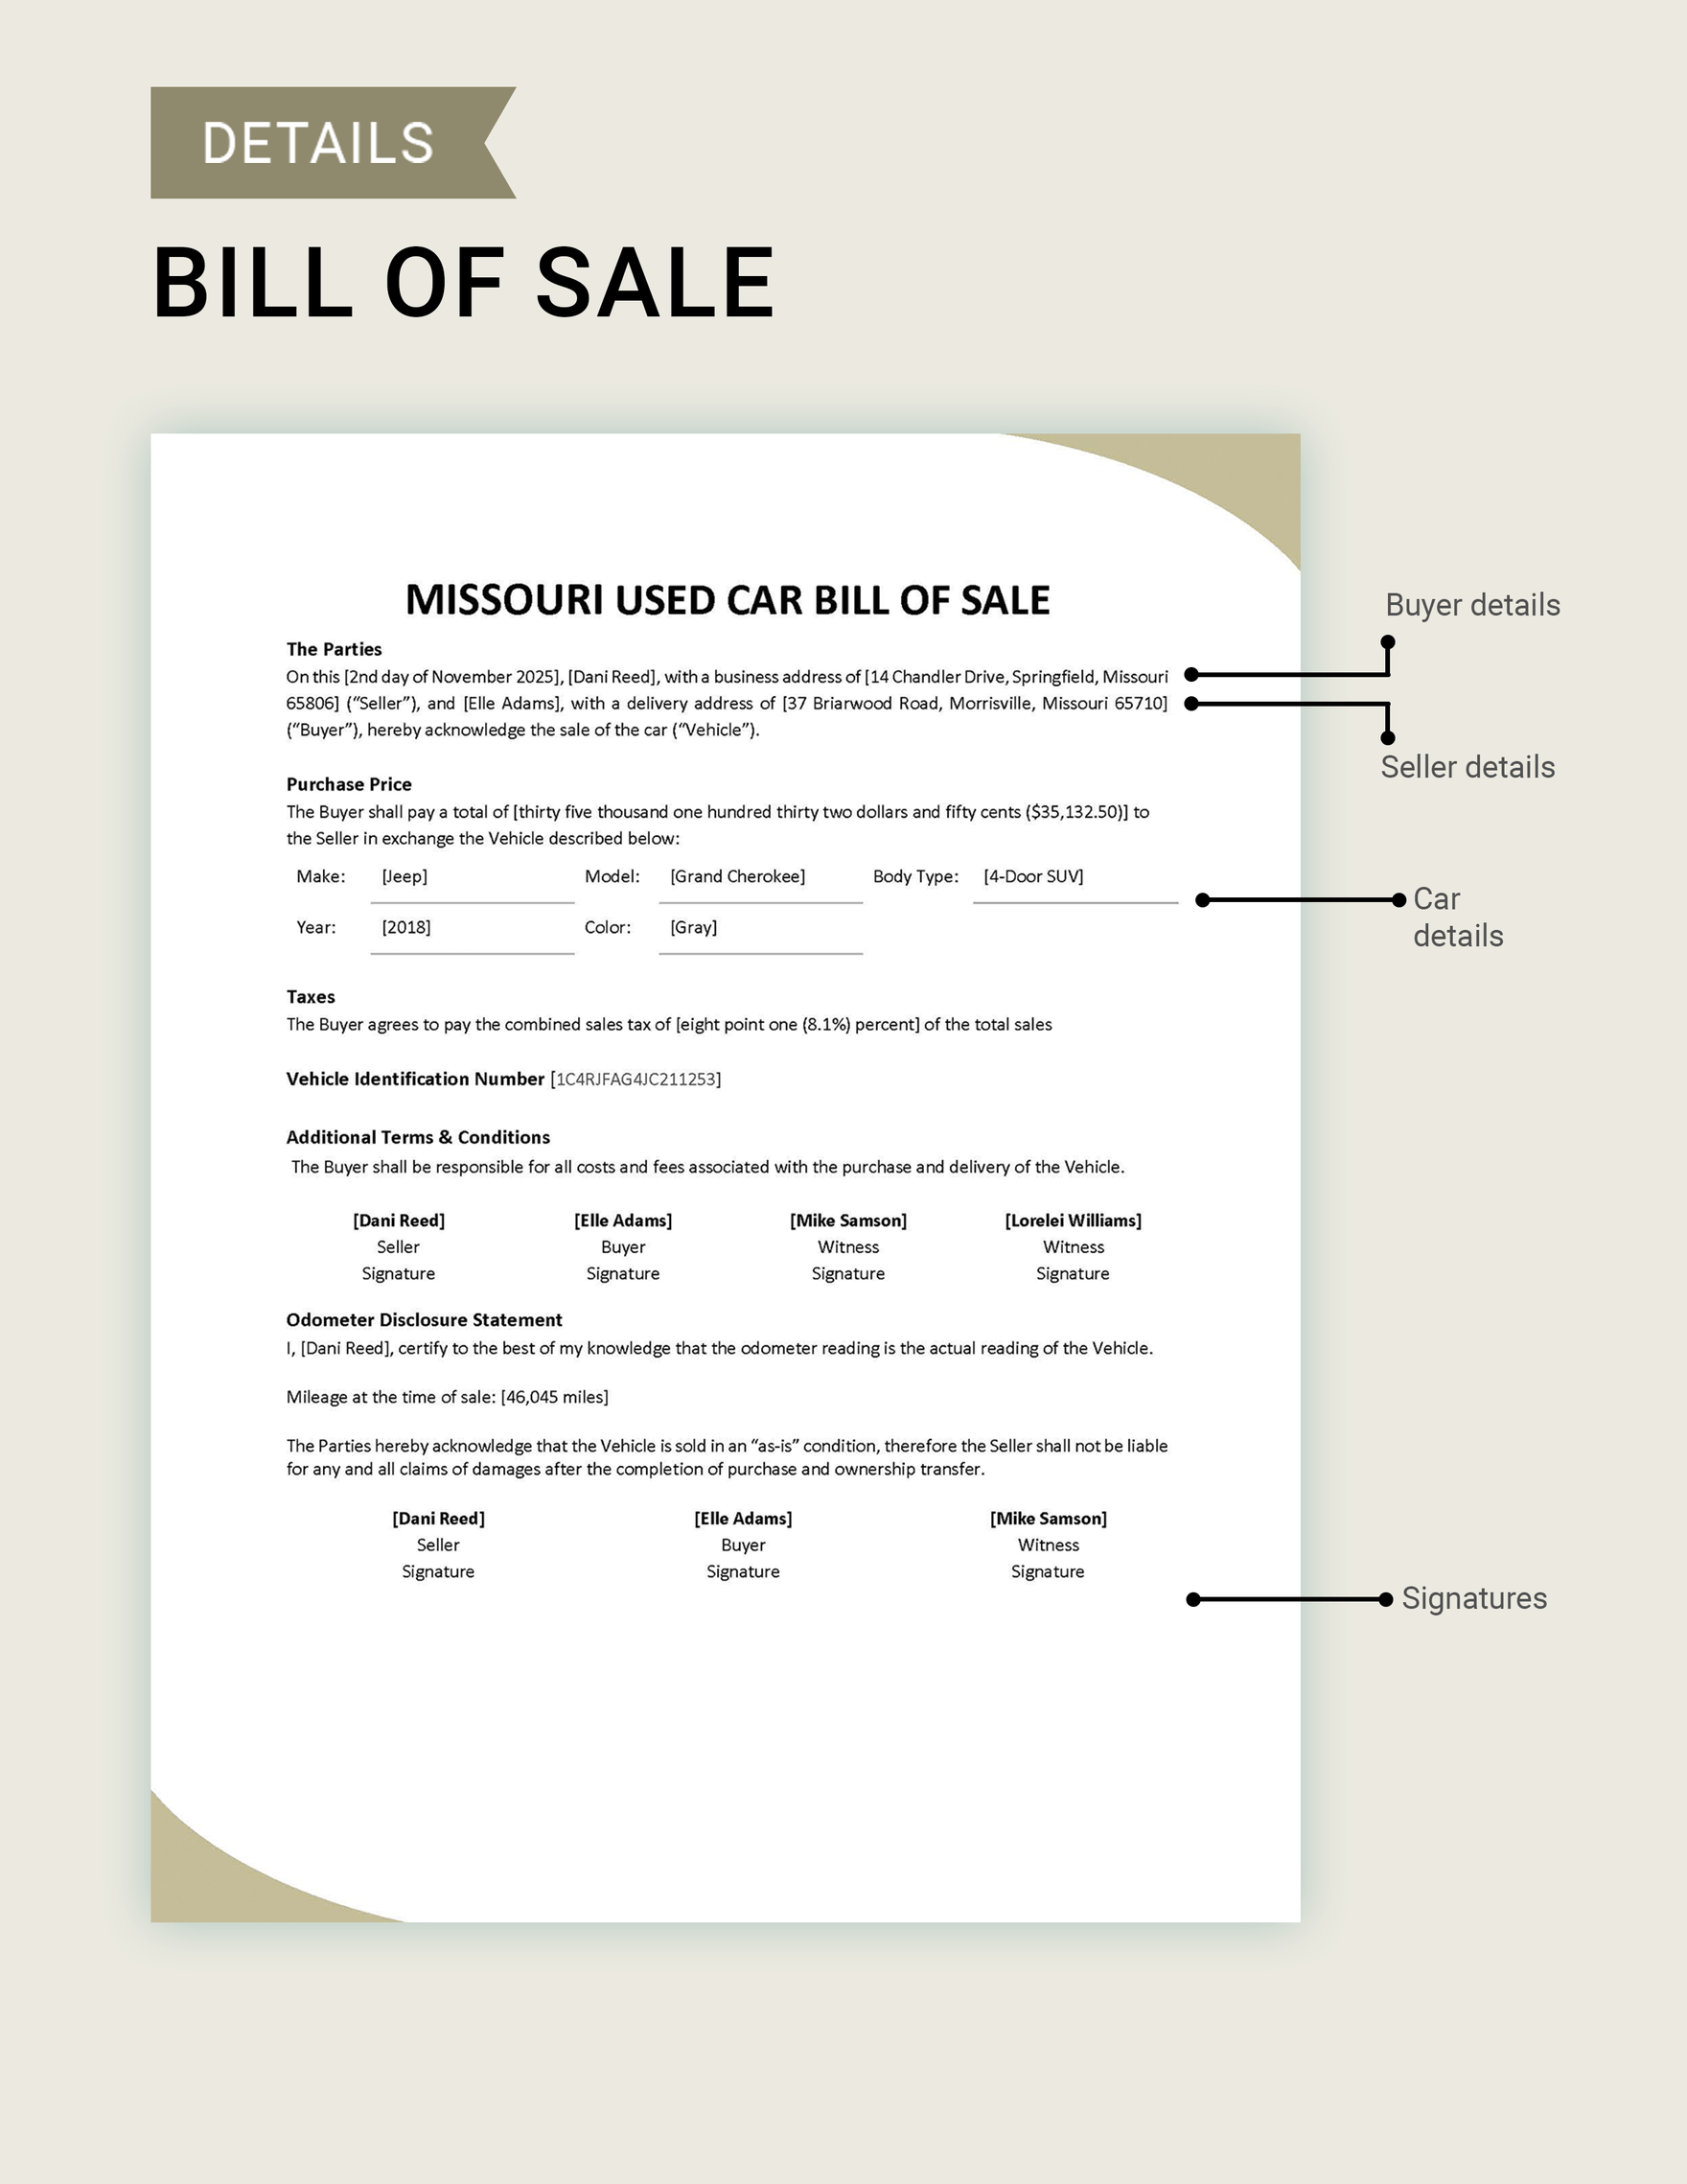 Missouri Used Car Bill of Sale Form Template